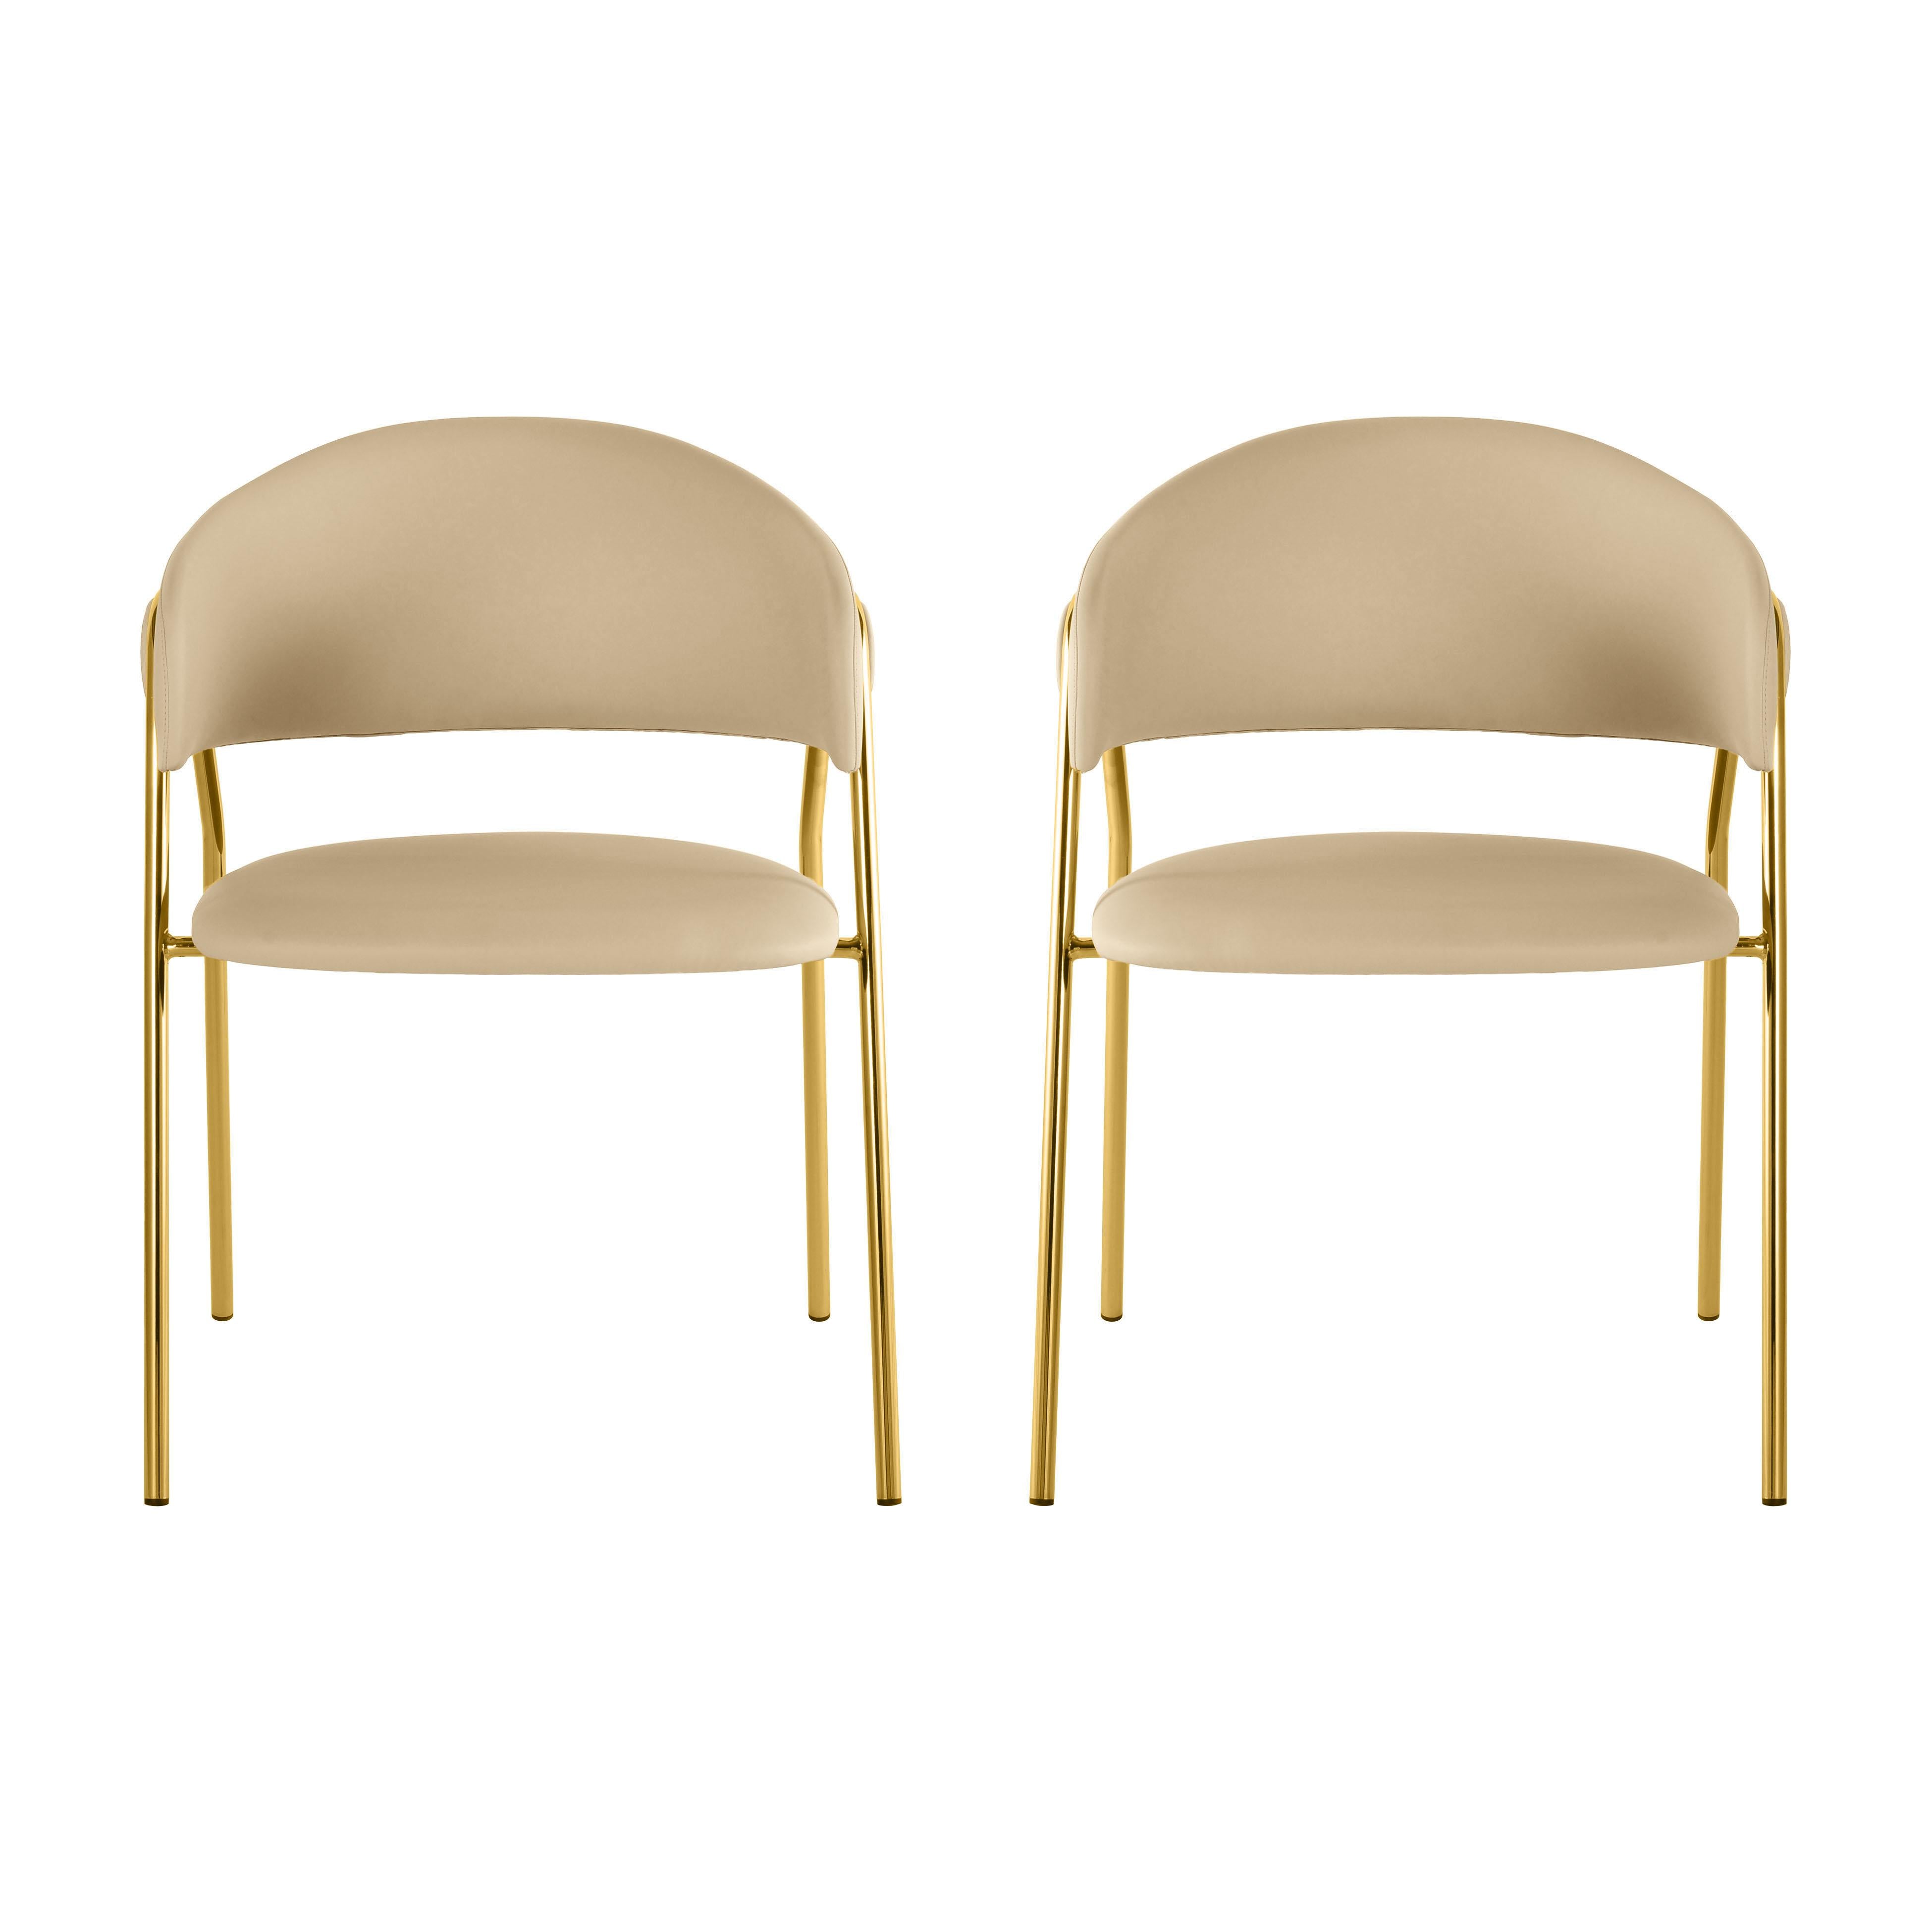 Tov Furniture Dining Chairs - Lara Cream Vegan Leather Dining Chair - Set of 2